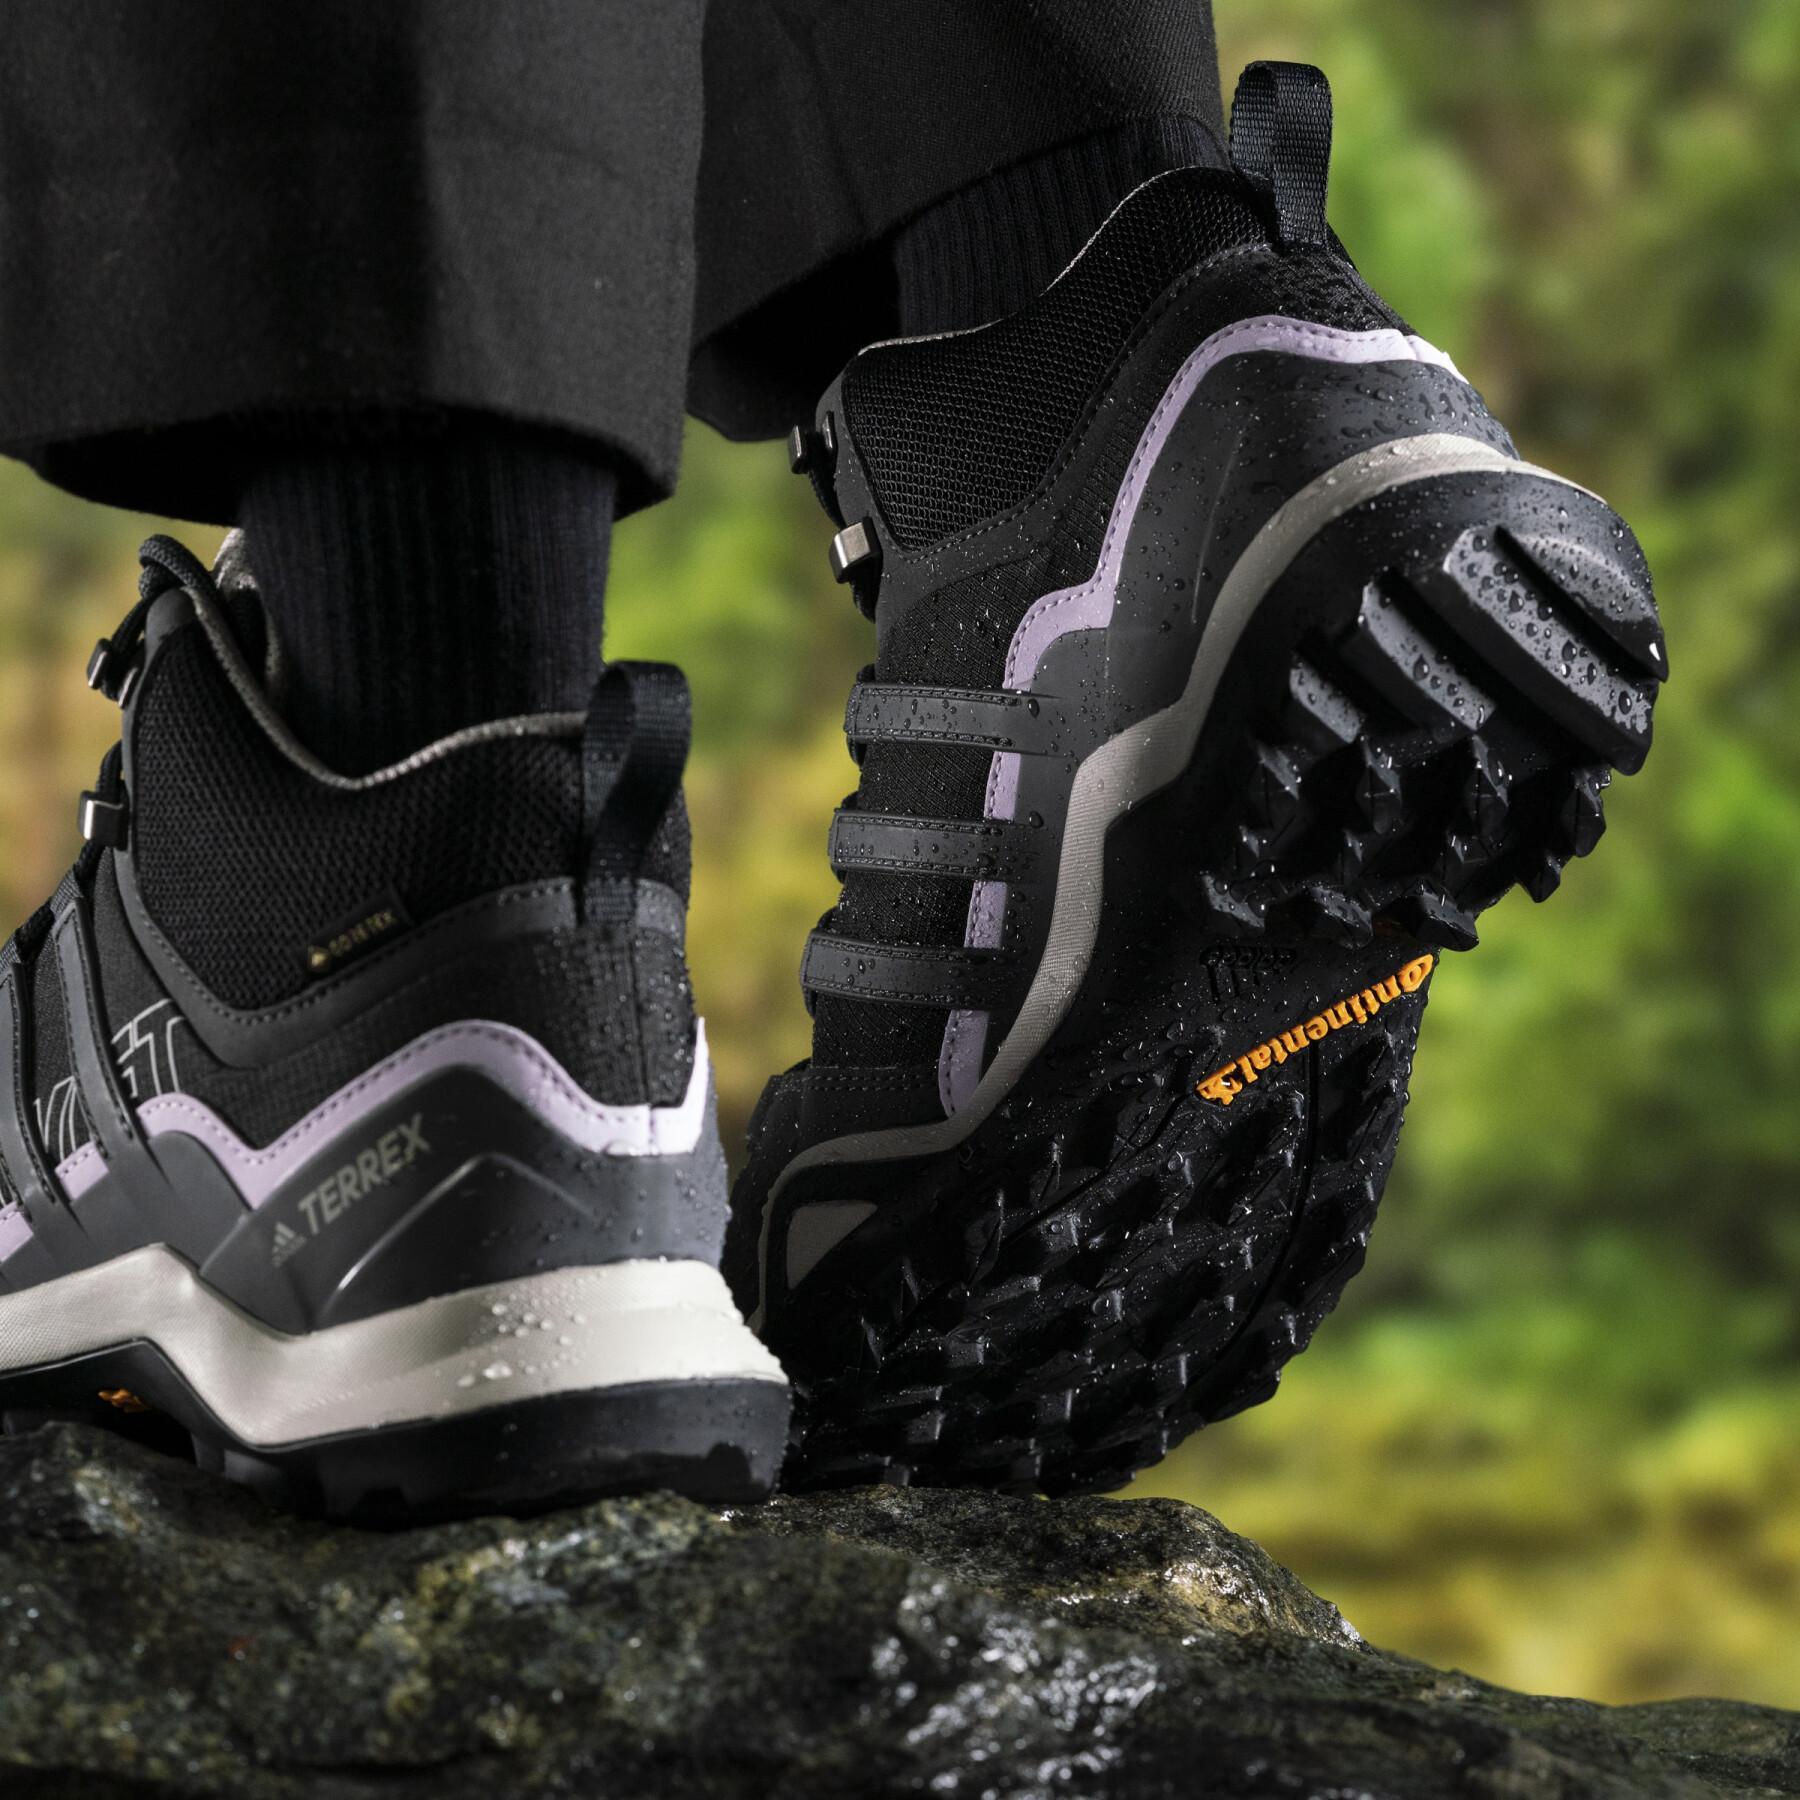 Women's hiking shoes adidas Terrex Swift R2 Mid GTX